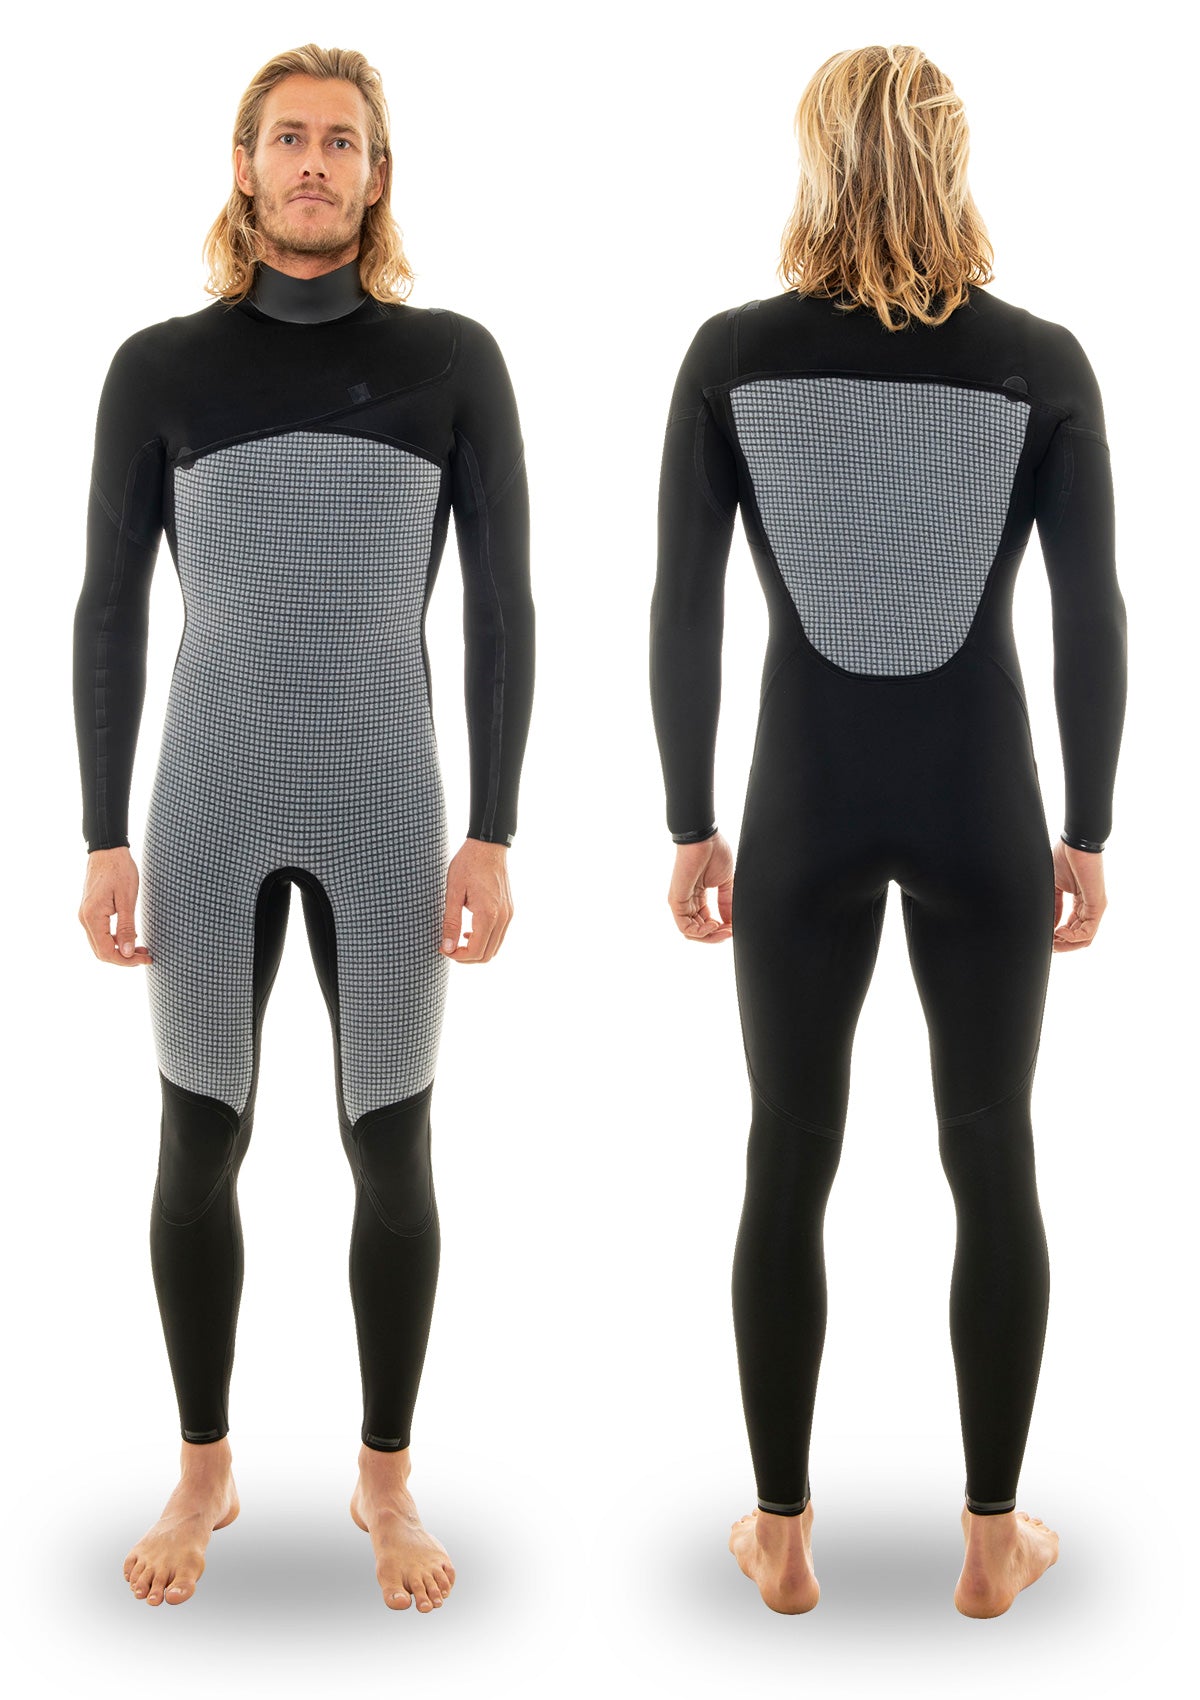 needessentials 4/3 chest zip thermal wetsuit torren martyn surfing winter non branded